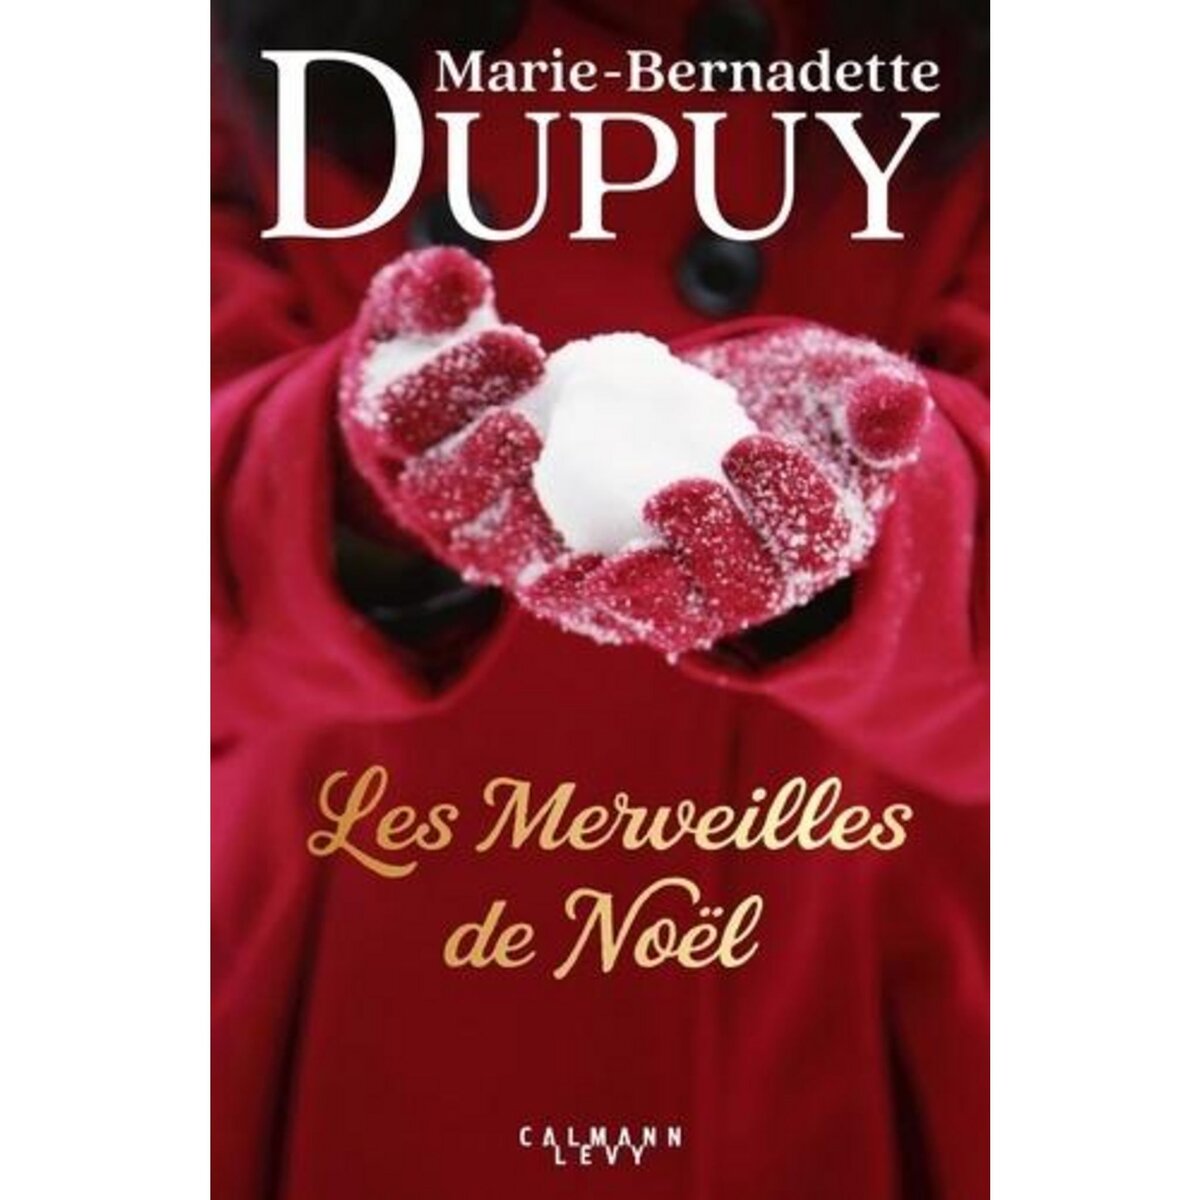  LES MERVEILLES DE NOEL, Dupuy Marie-Bernadette